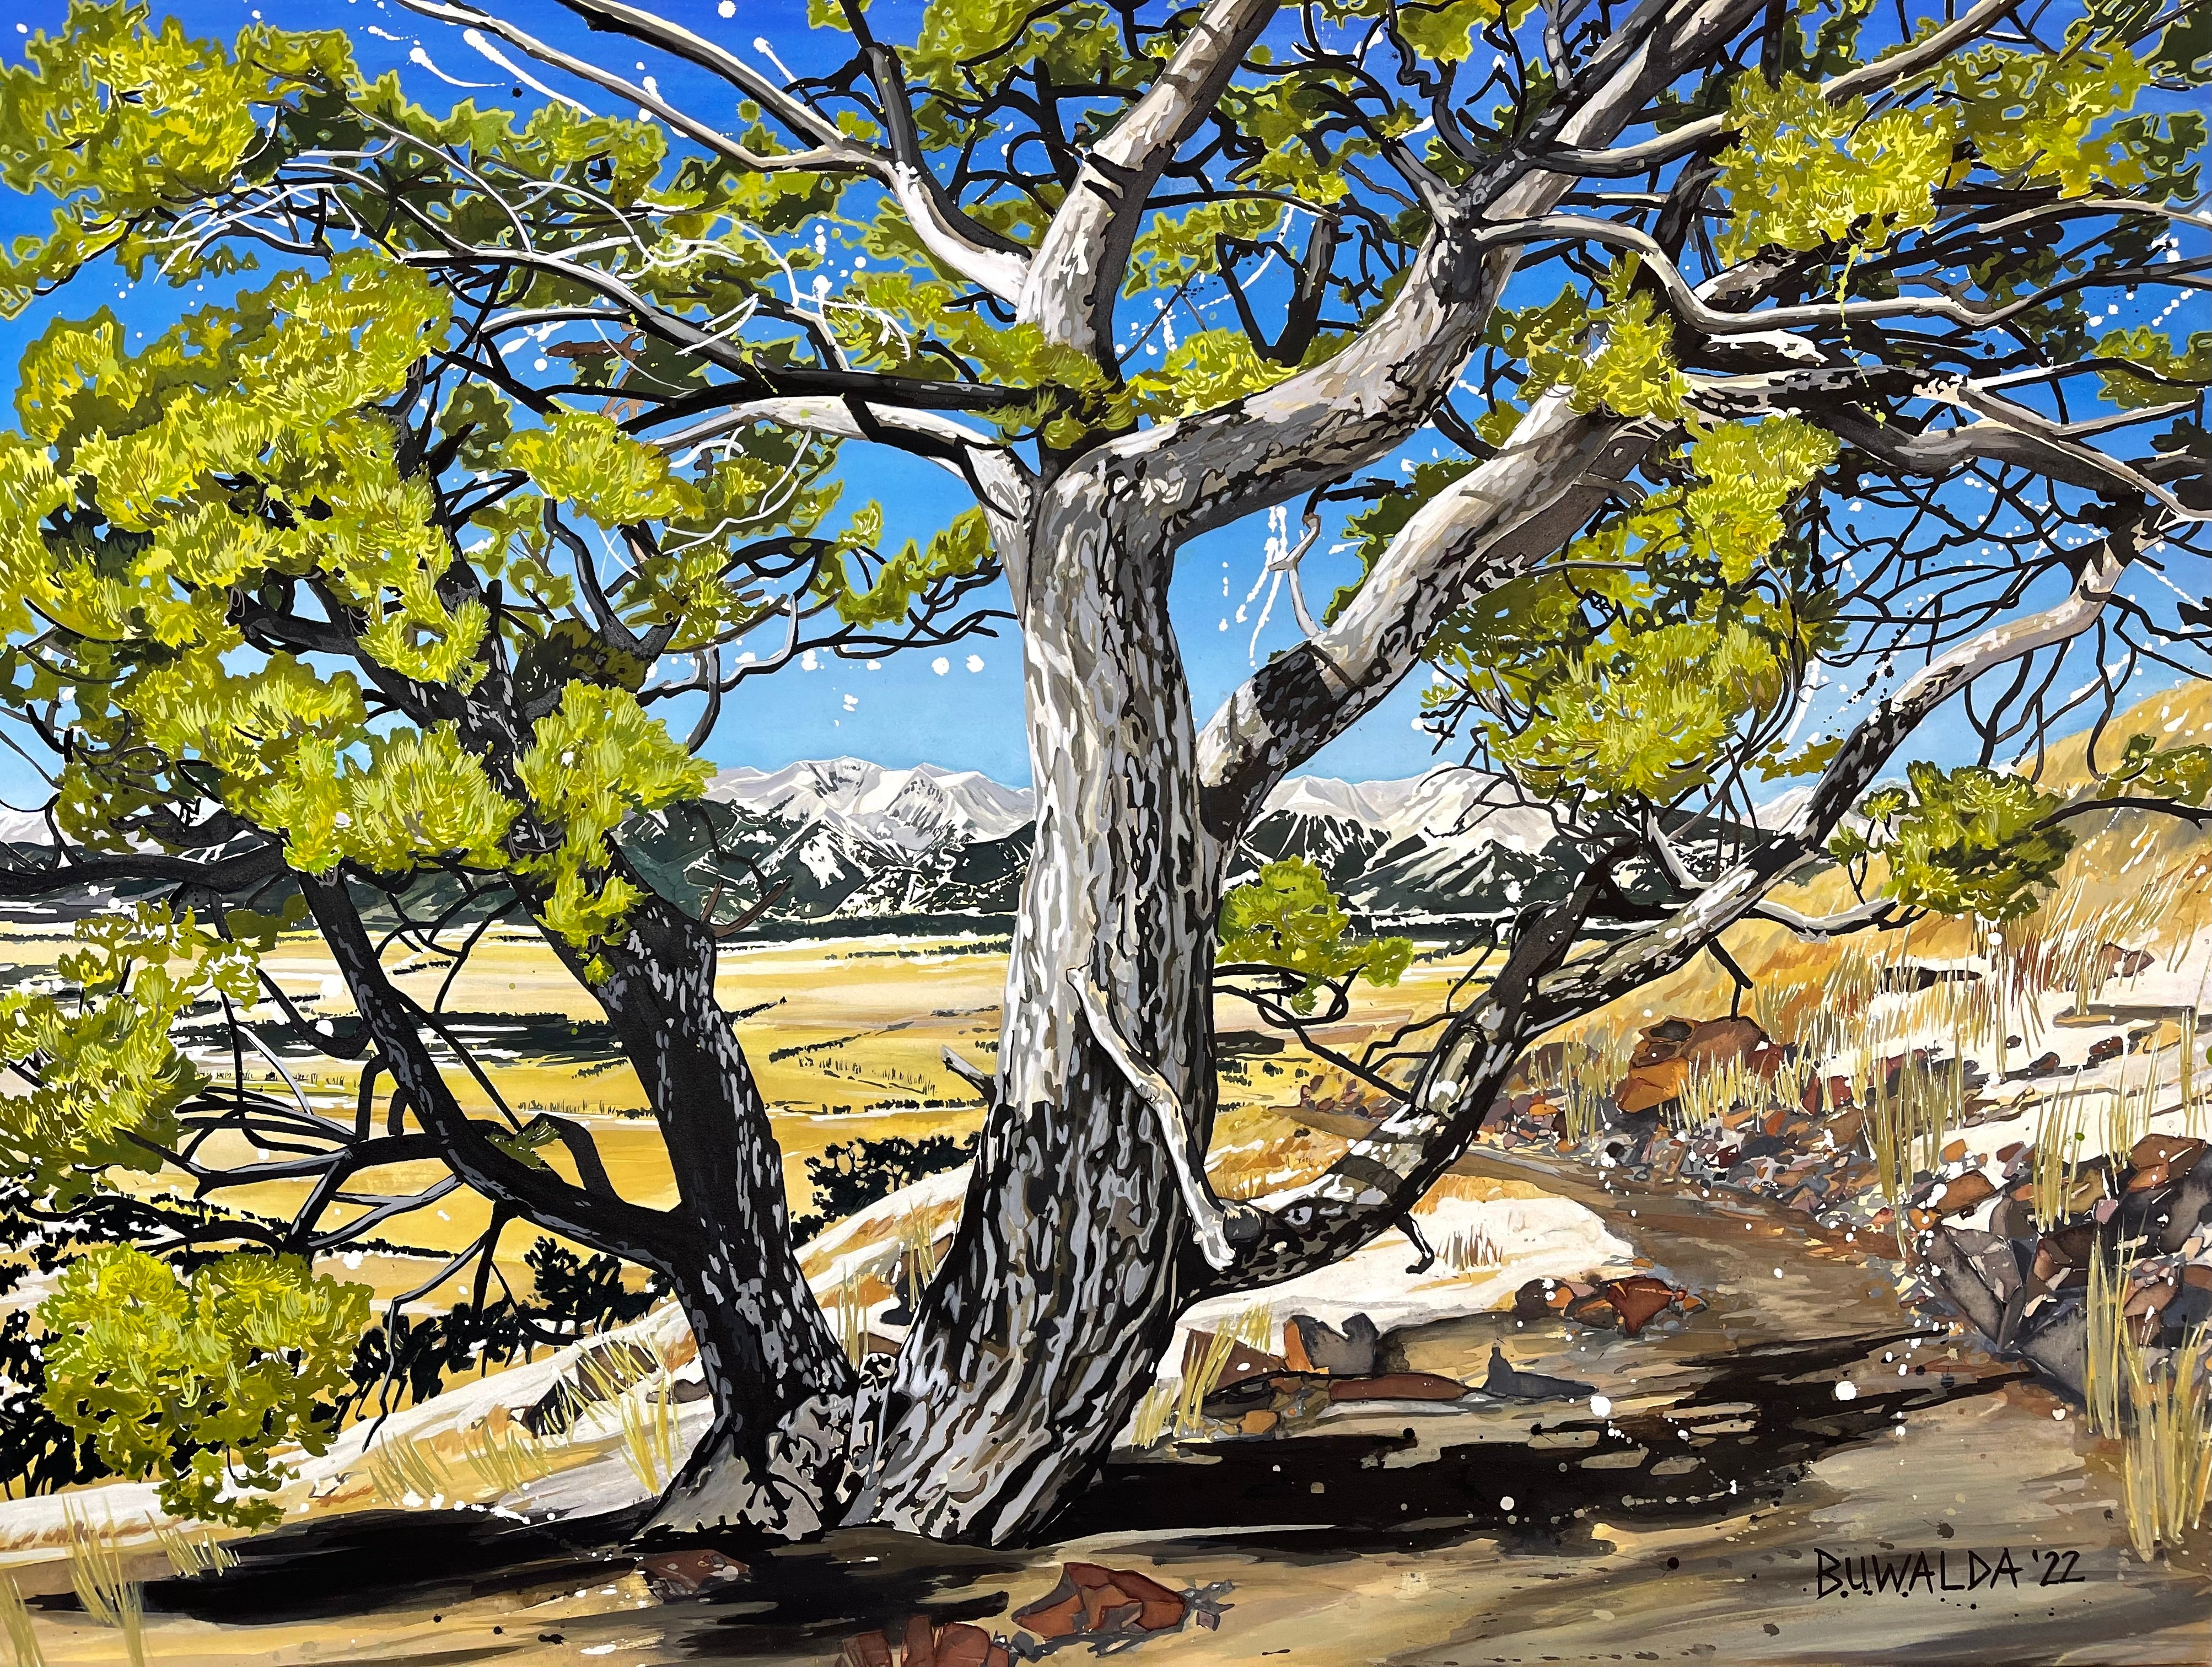 Print LARGE Colorado Tree Series "Pinyon"